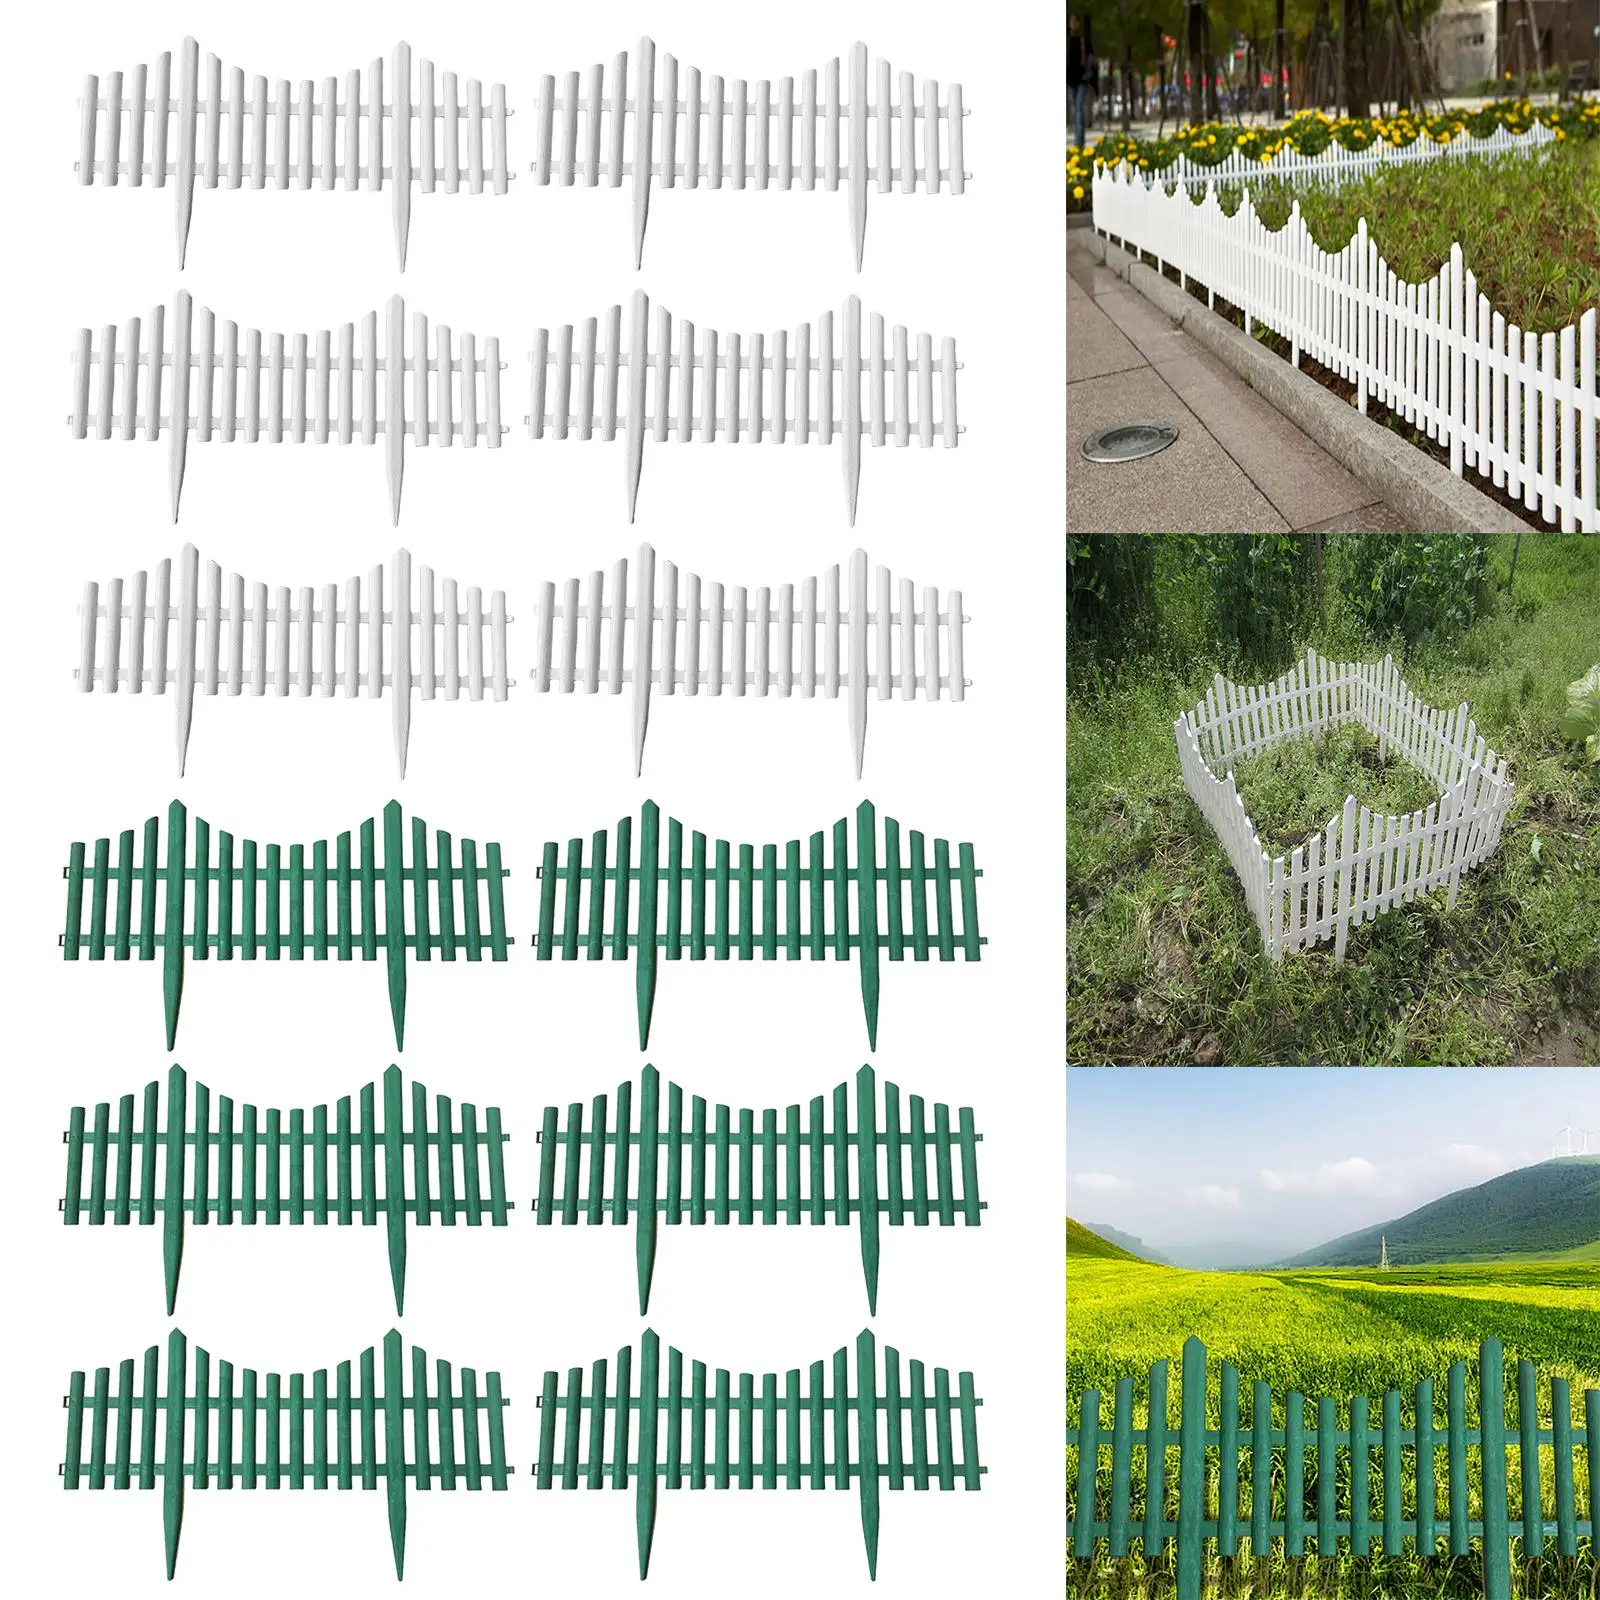 6x Garden Fence Border Edging Edging Interlock Plant Decoration Fence lawn Border Lawn Fence for DIY Decoration